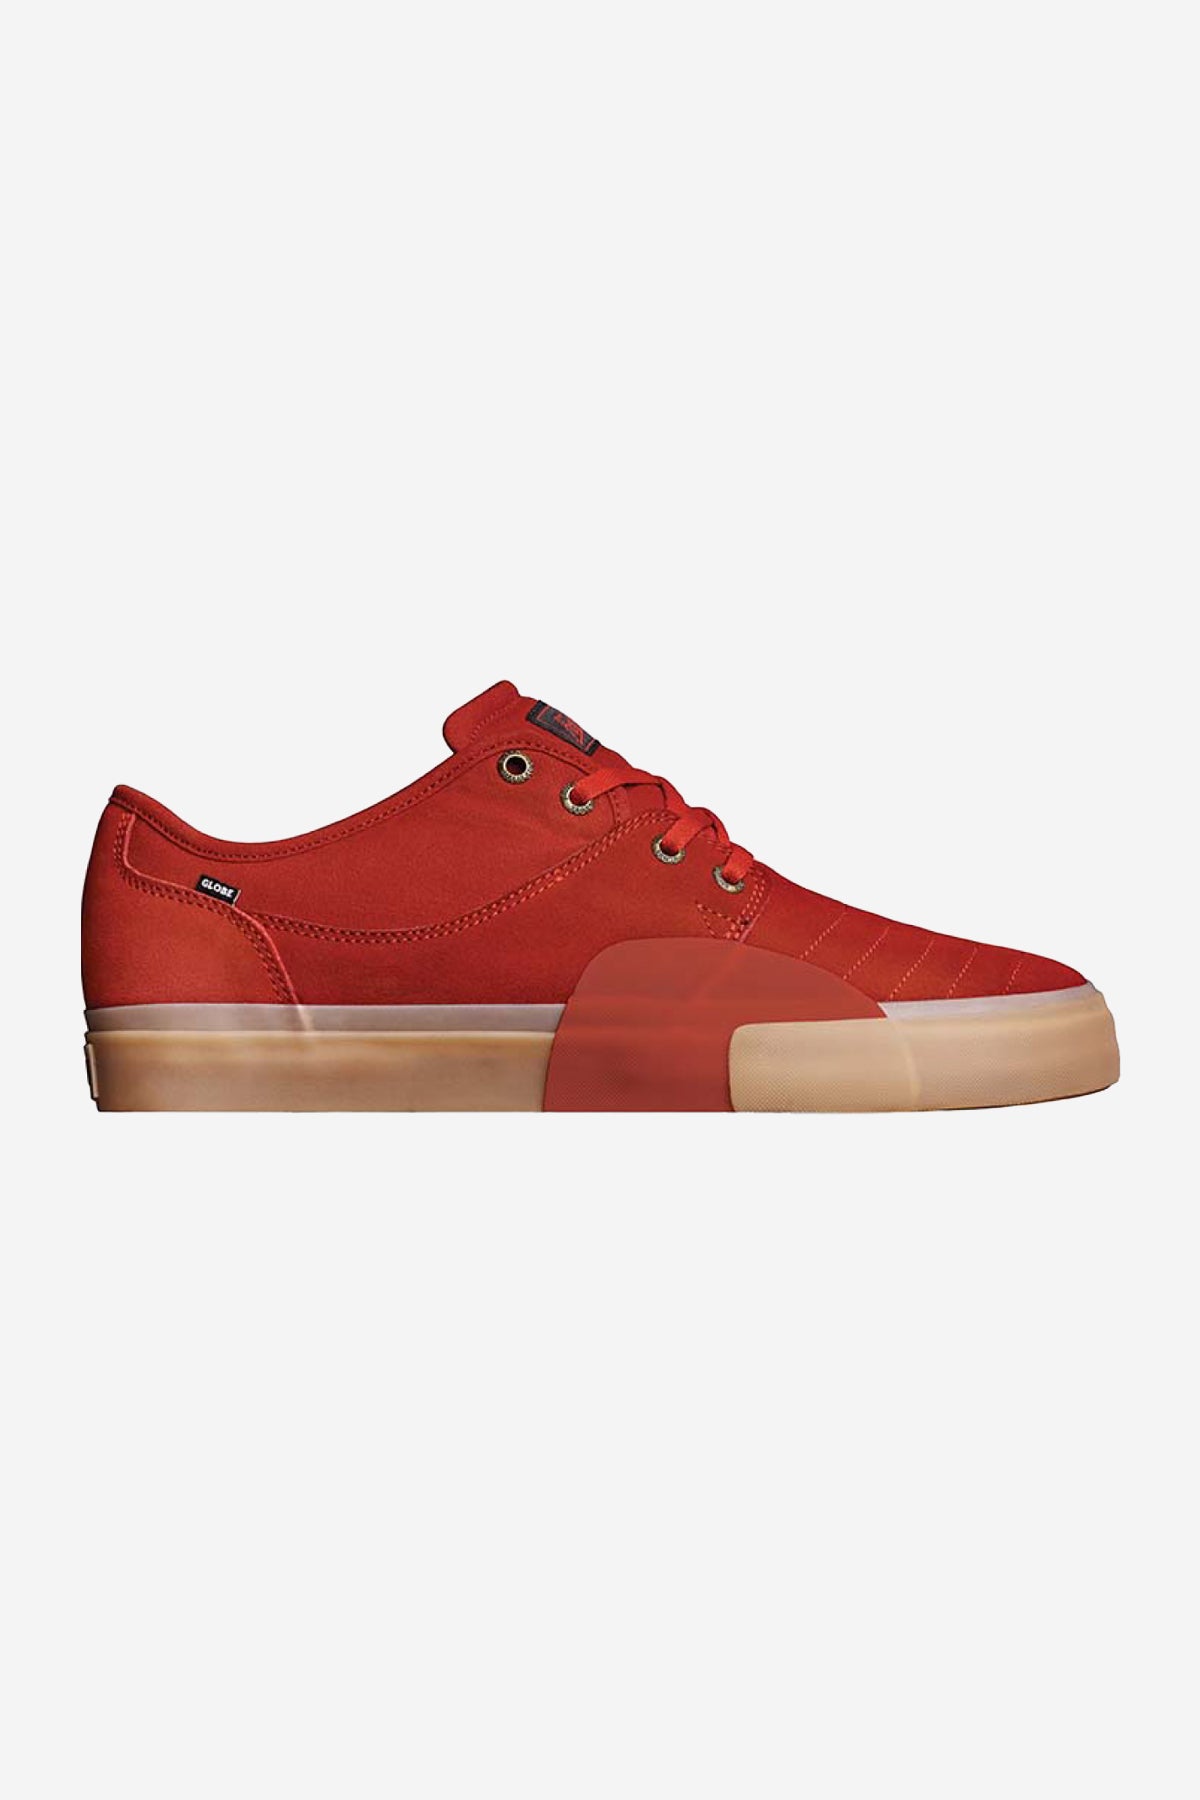 Mahalo Plus Red/Gum skateboard scarpe